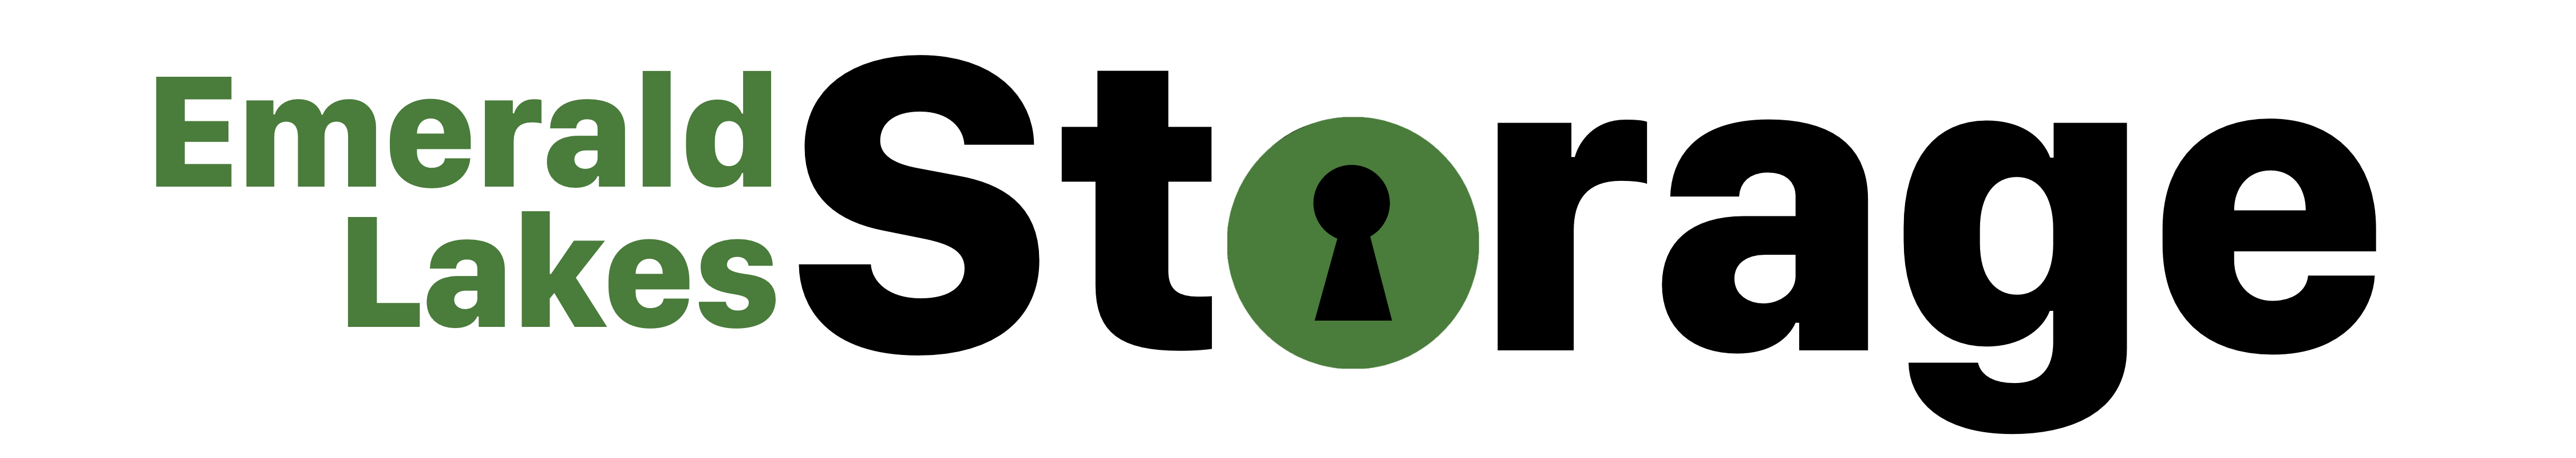 emerald-lakes-logo